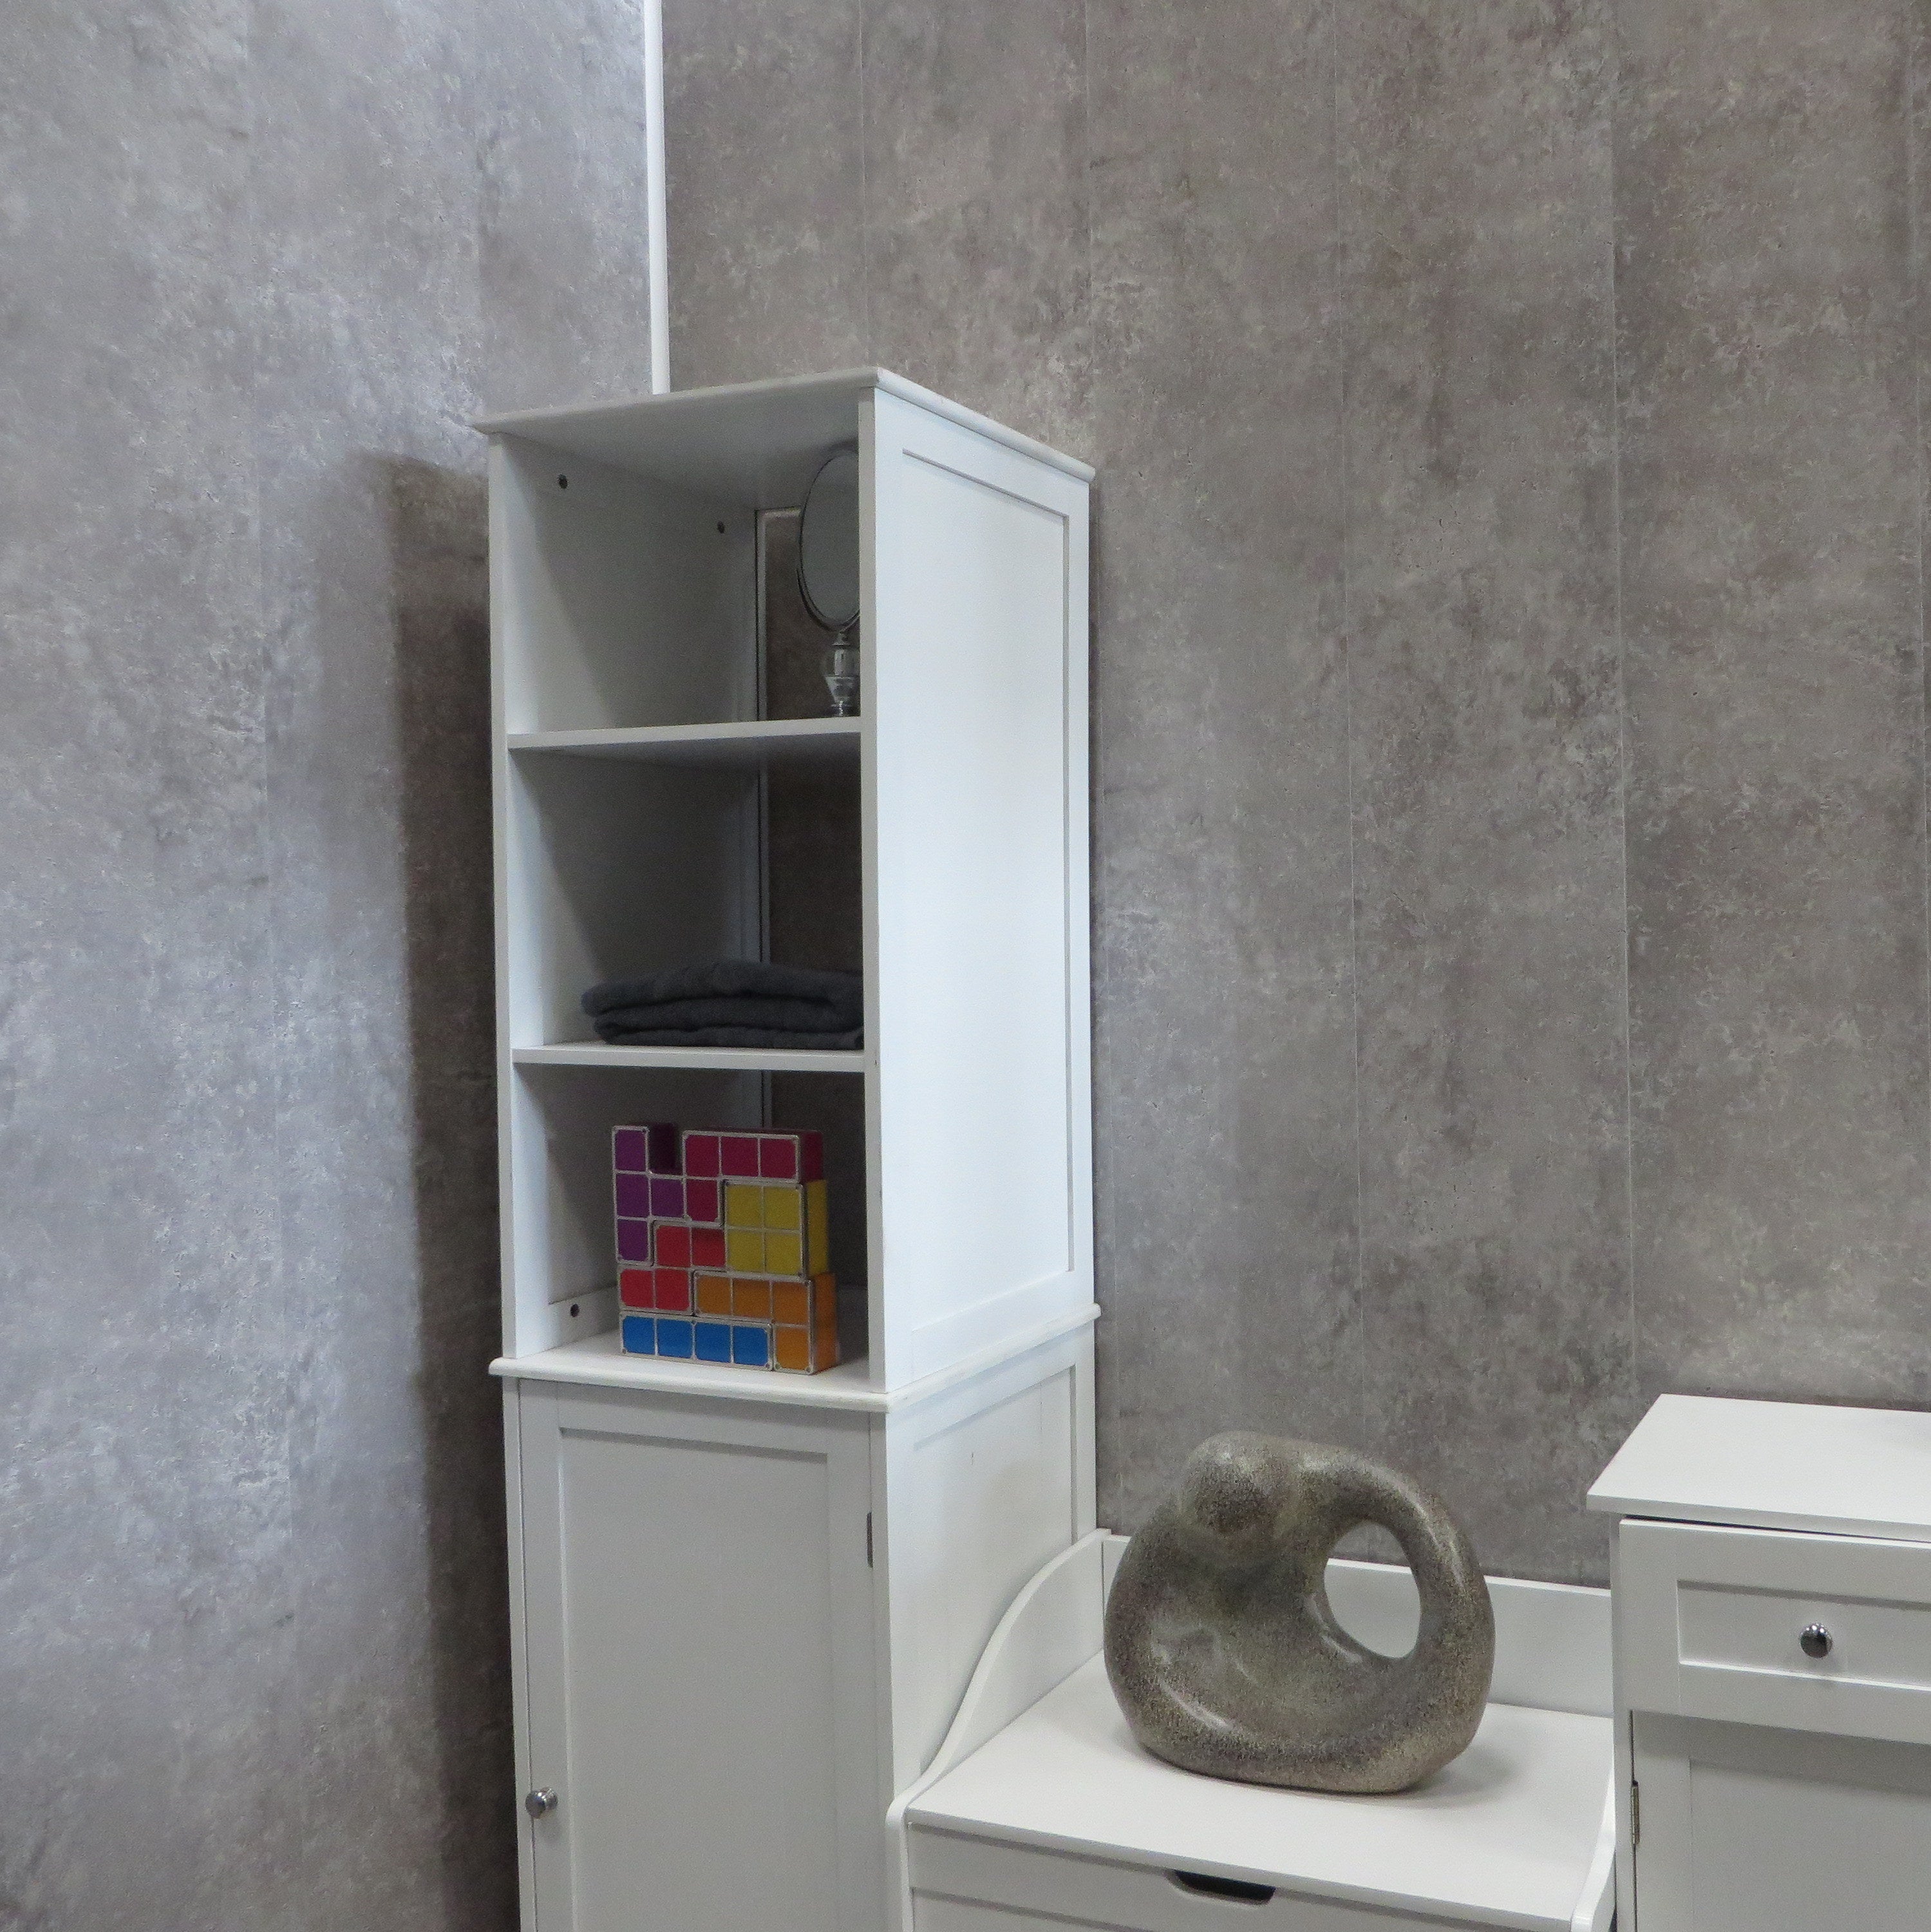 Sample of Concrete Grey 5mm Bathroom Cladding PVC Wall Panels